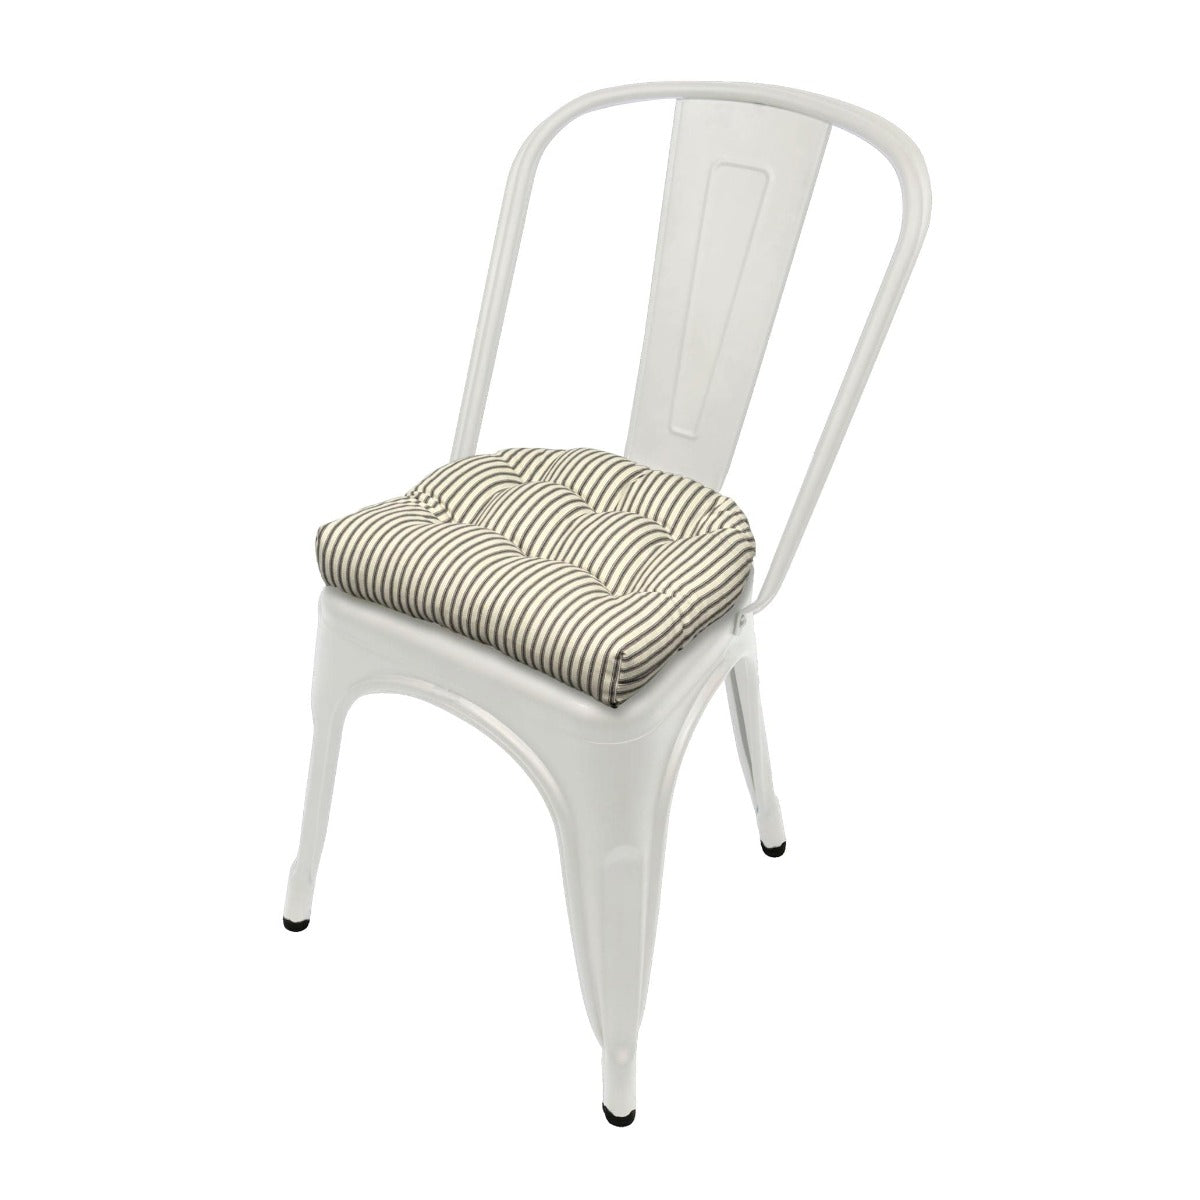 Barnett Home Decor Tolix Chair Pad - Buffalo Check - Metal Chair Cushions,  14x14 Chair Cushions, Latex Foam Fill Small Seat Cushion with Ties (Buffalo